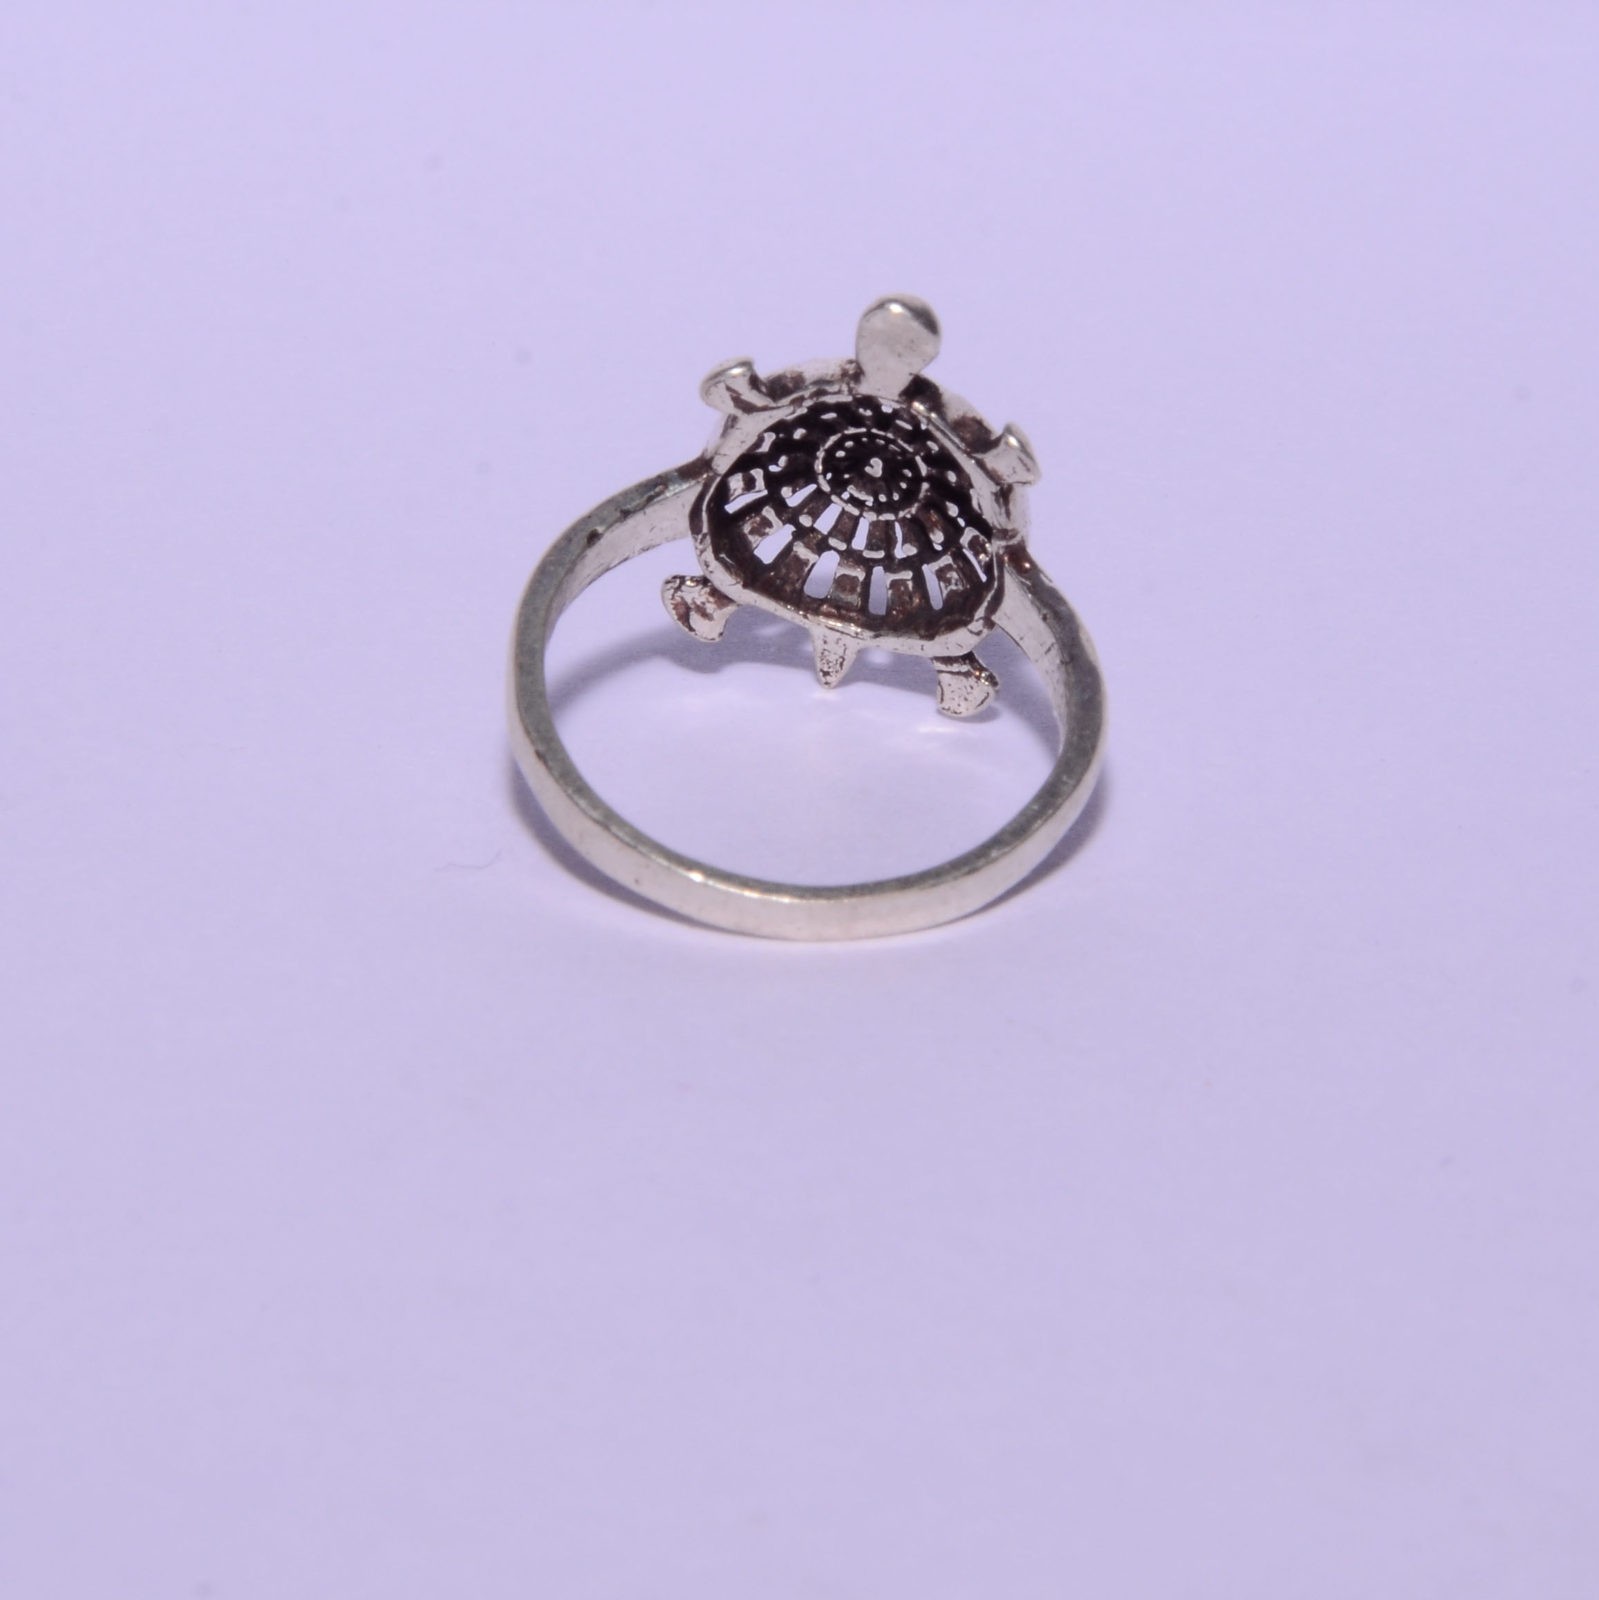 BALI LEGACY Tortoise Ring in Sterling Silver (Size 9.0) 4.46 Grams | eBay